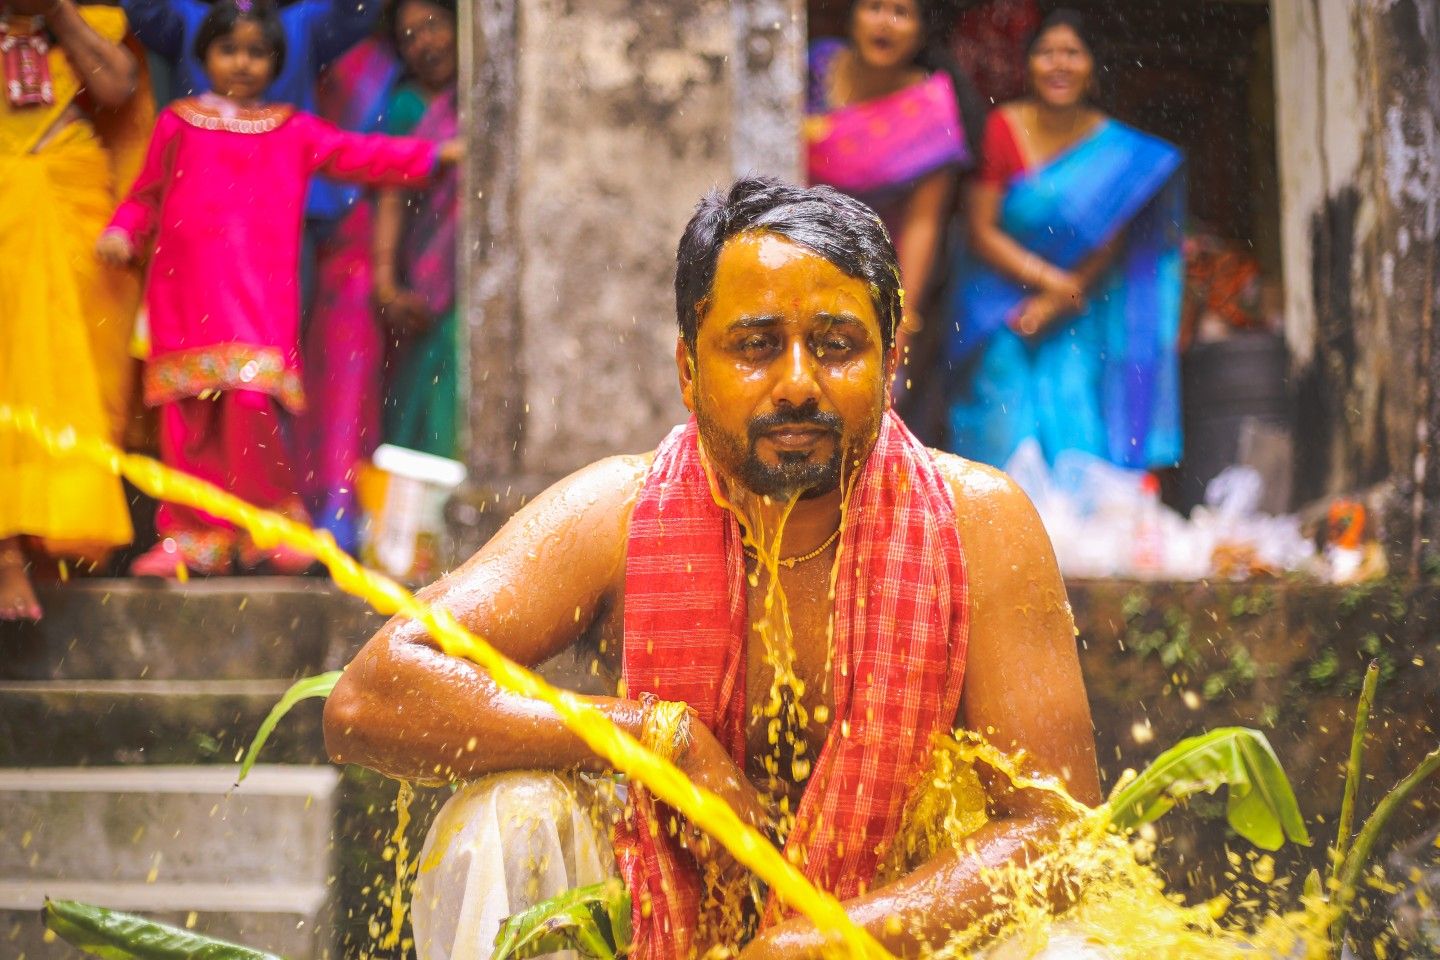 Ritual of bengali wedding hi-res stock photography and images - Alamy